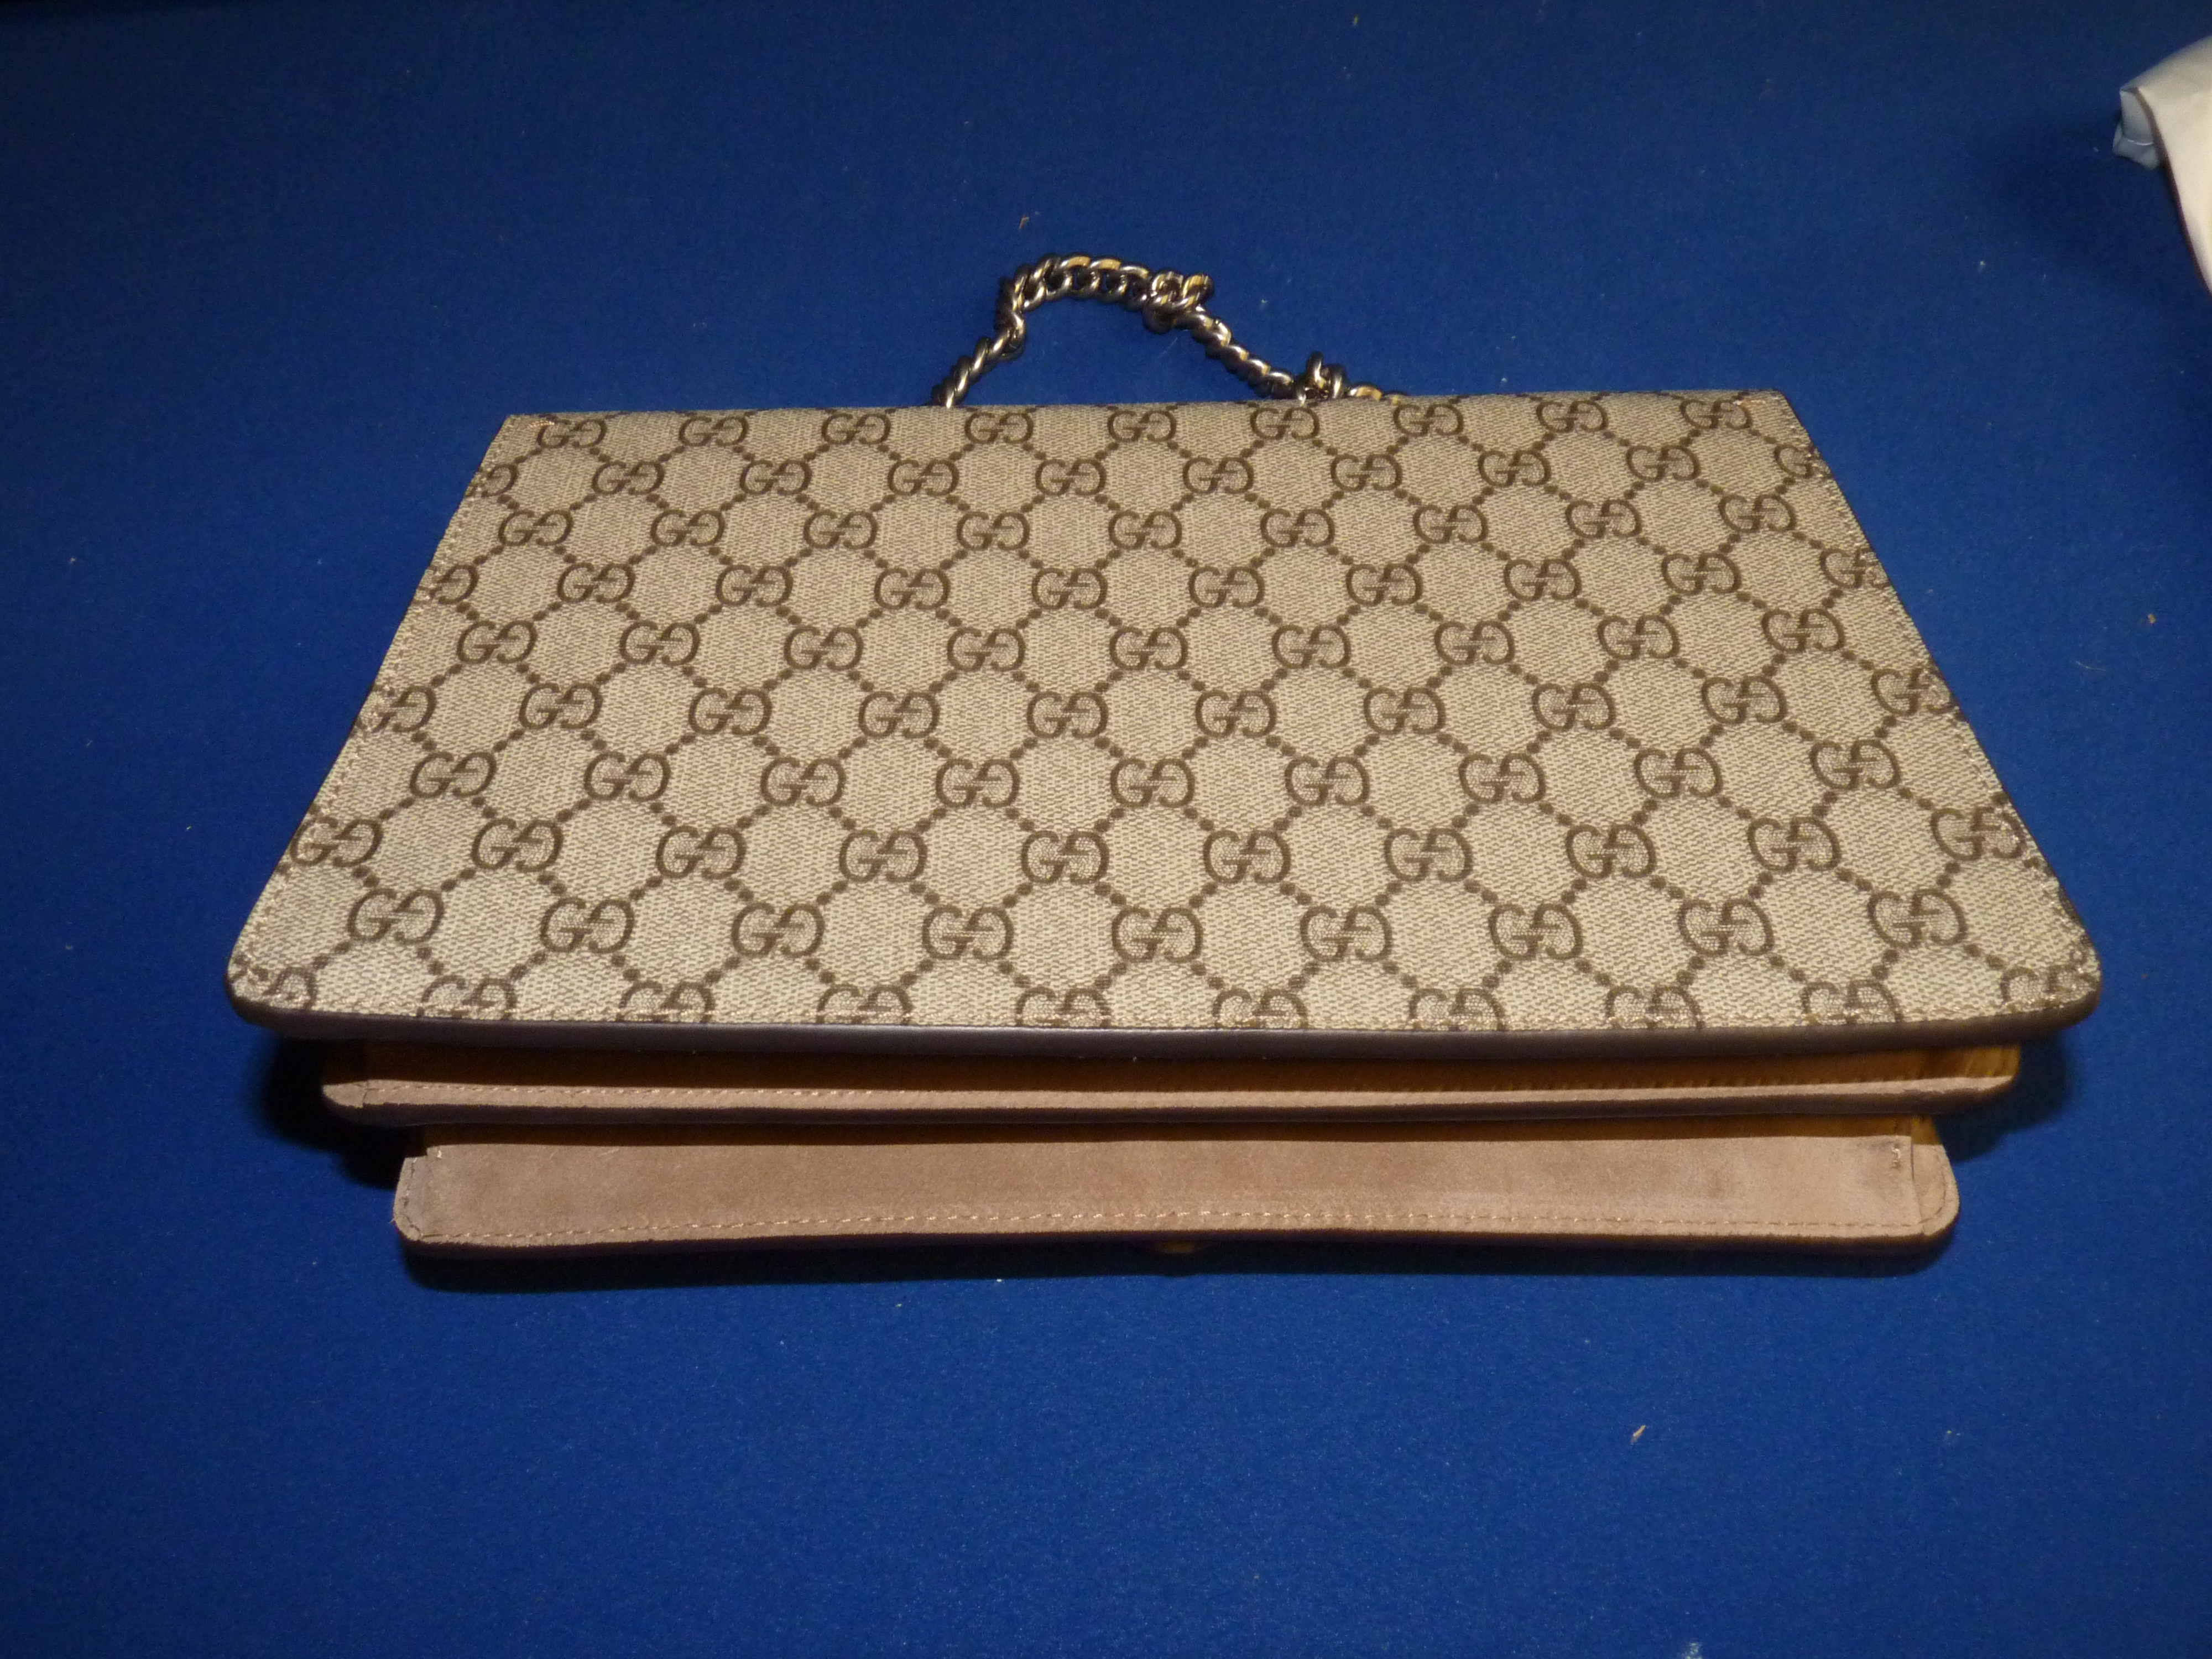 Gucci suede inner handbag - Image 2 of 6